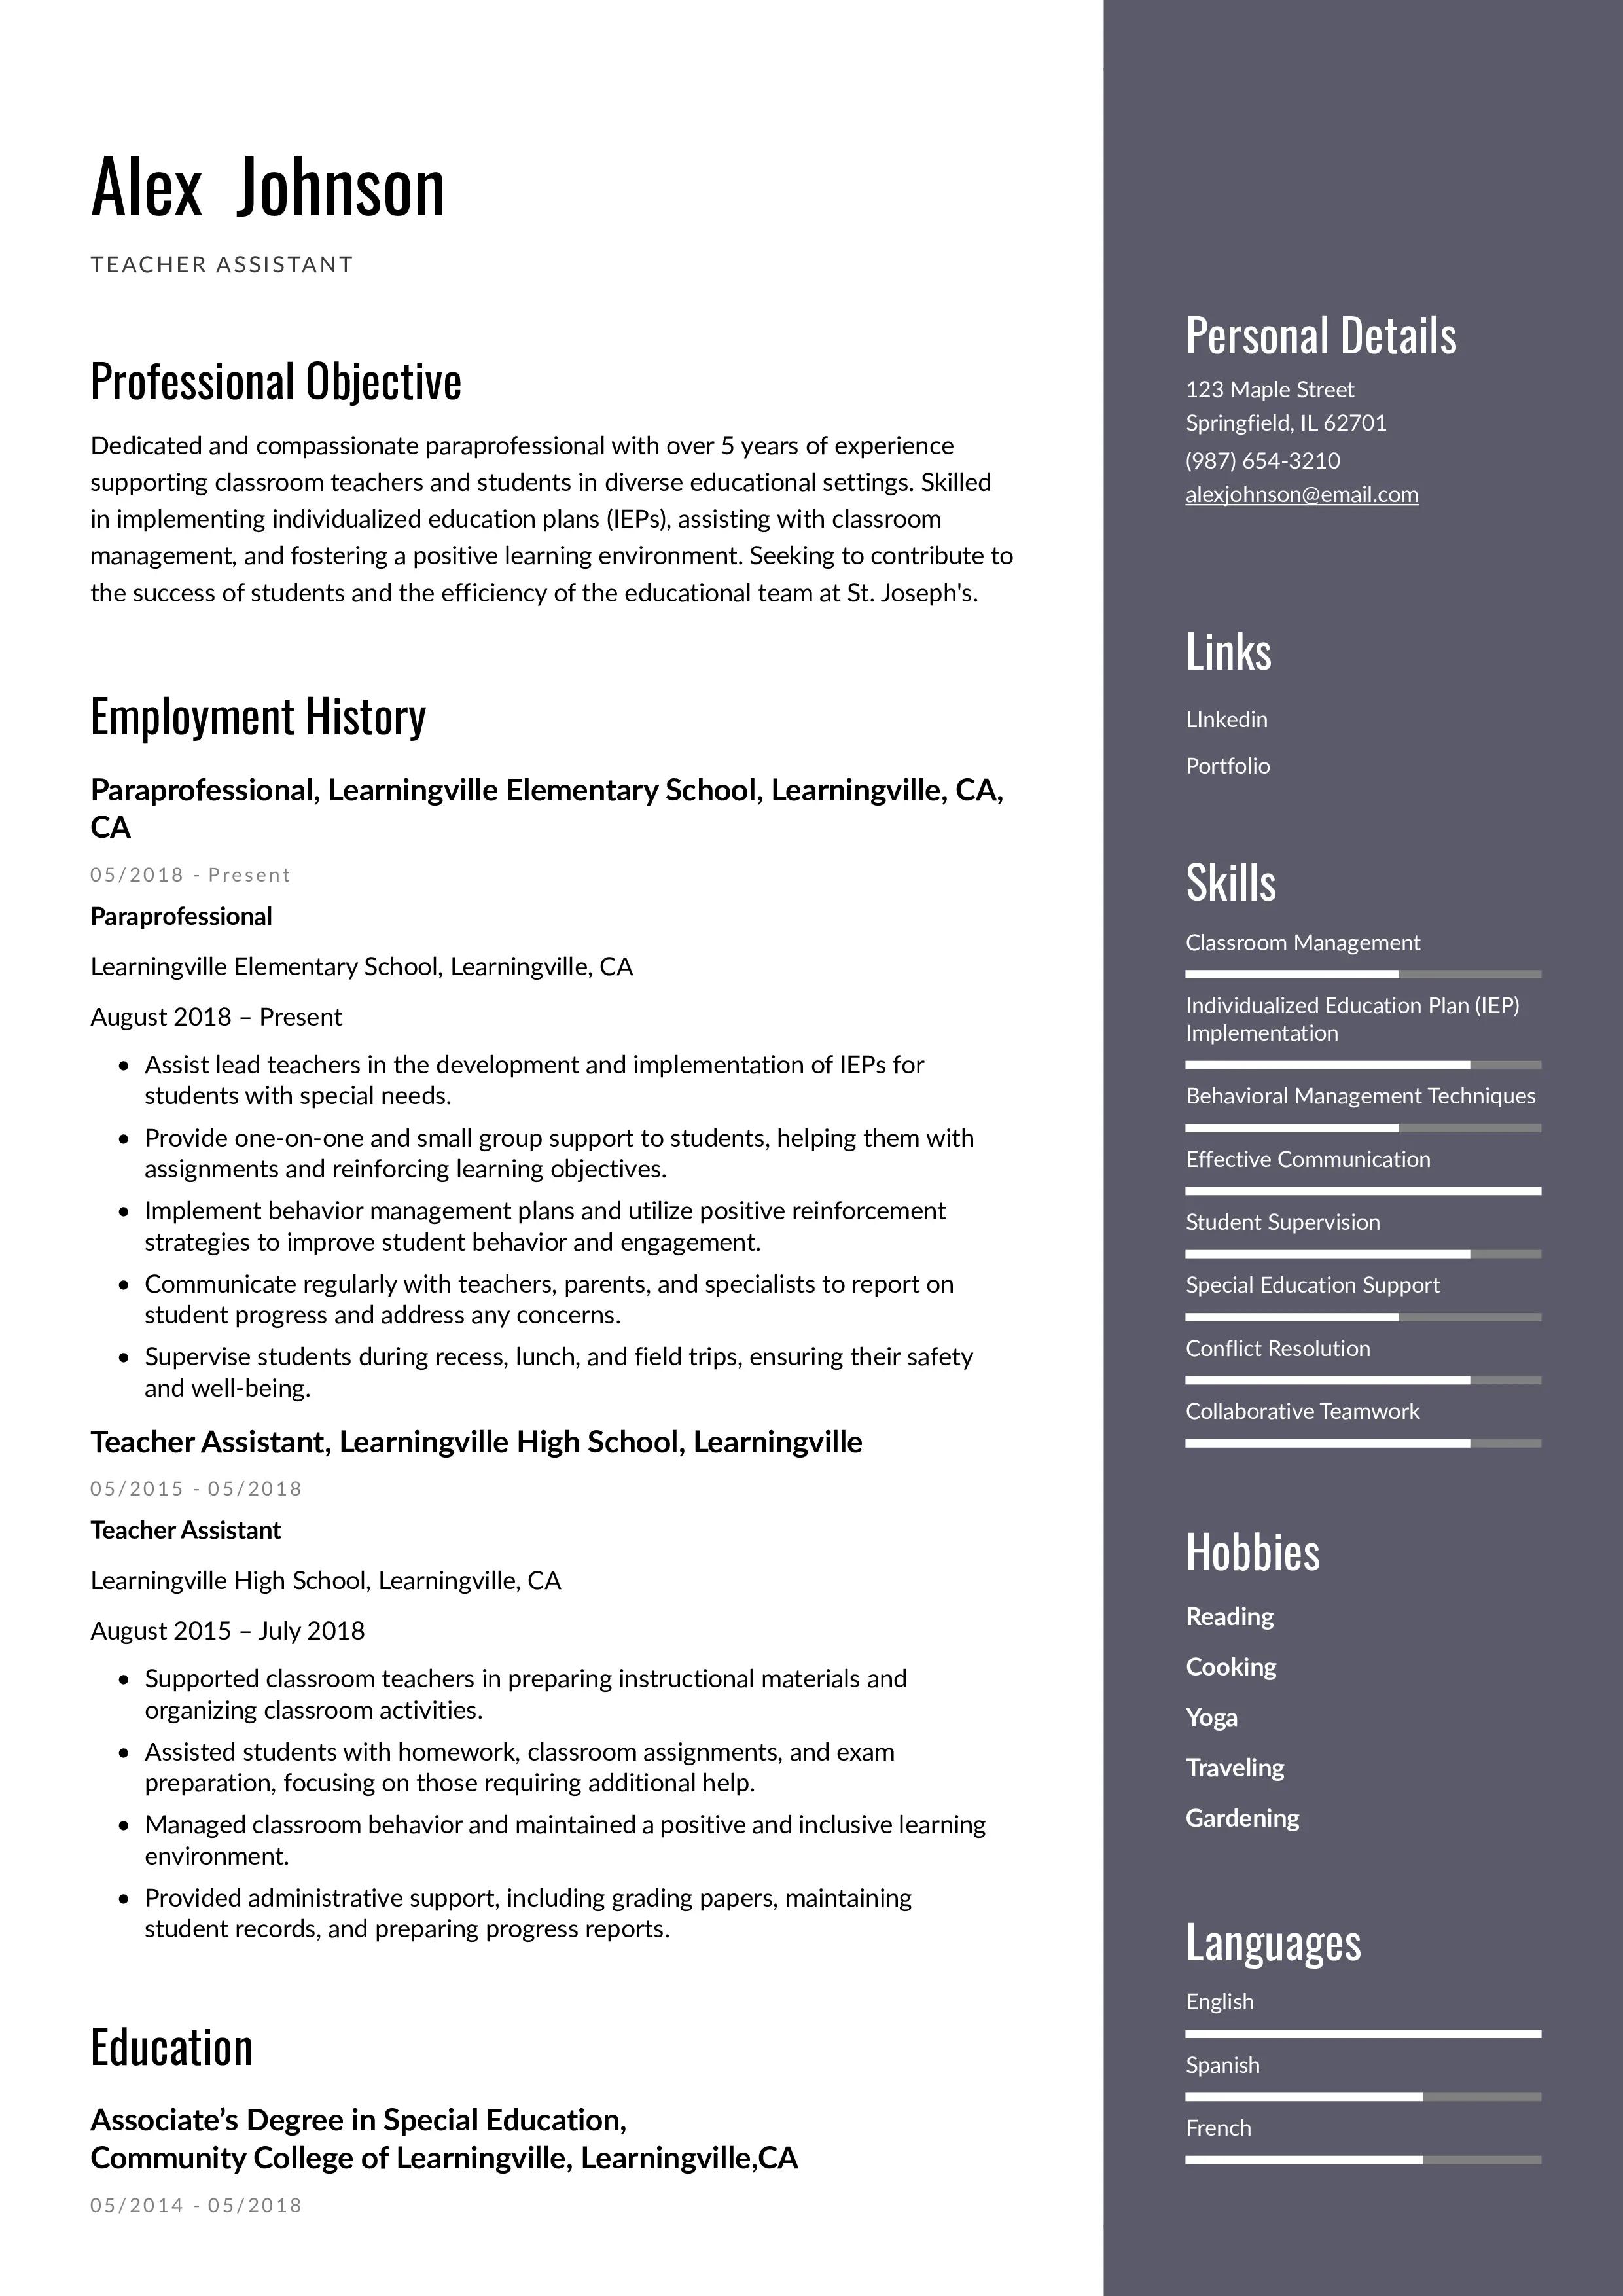 Resume example of teacher assistant resume using instaresume.io template.